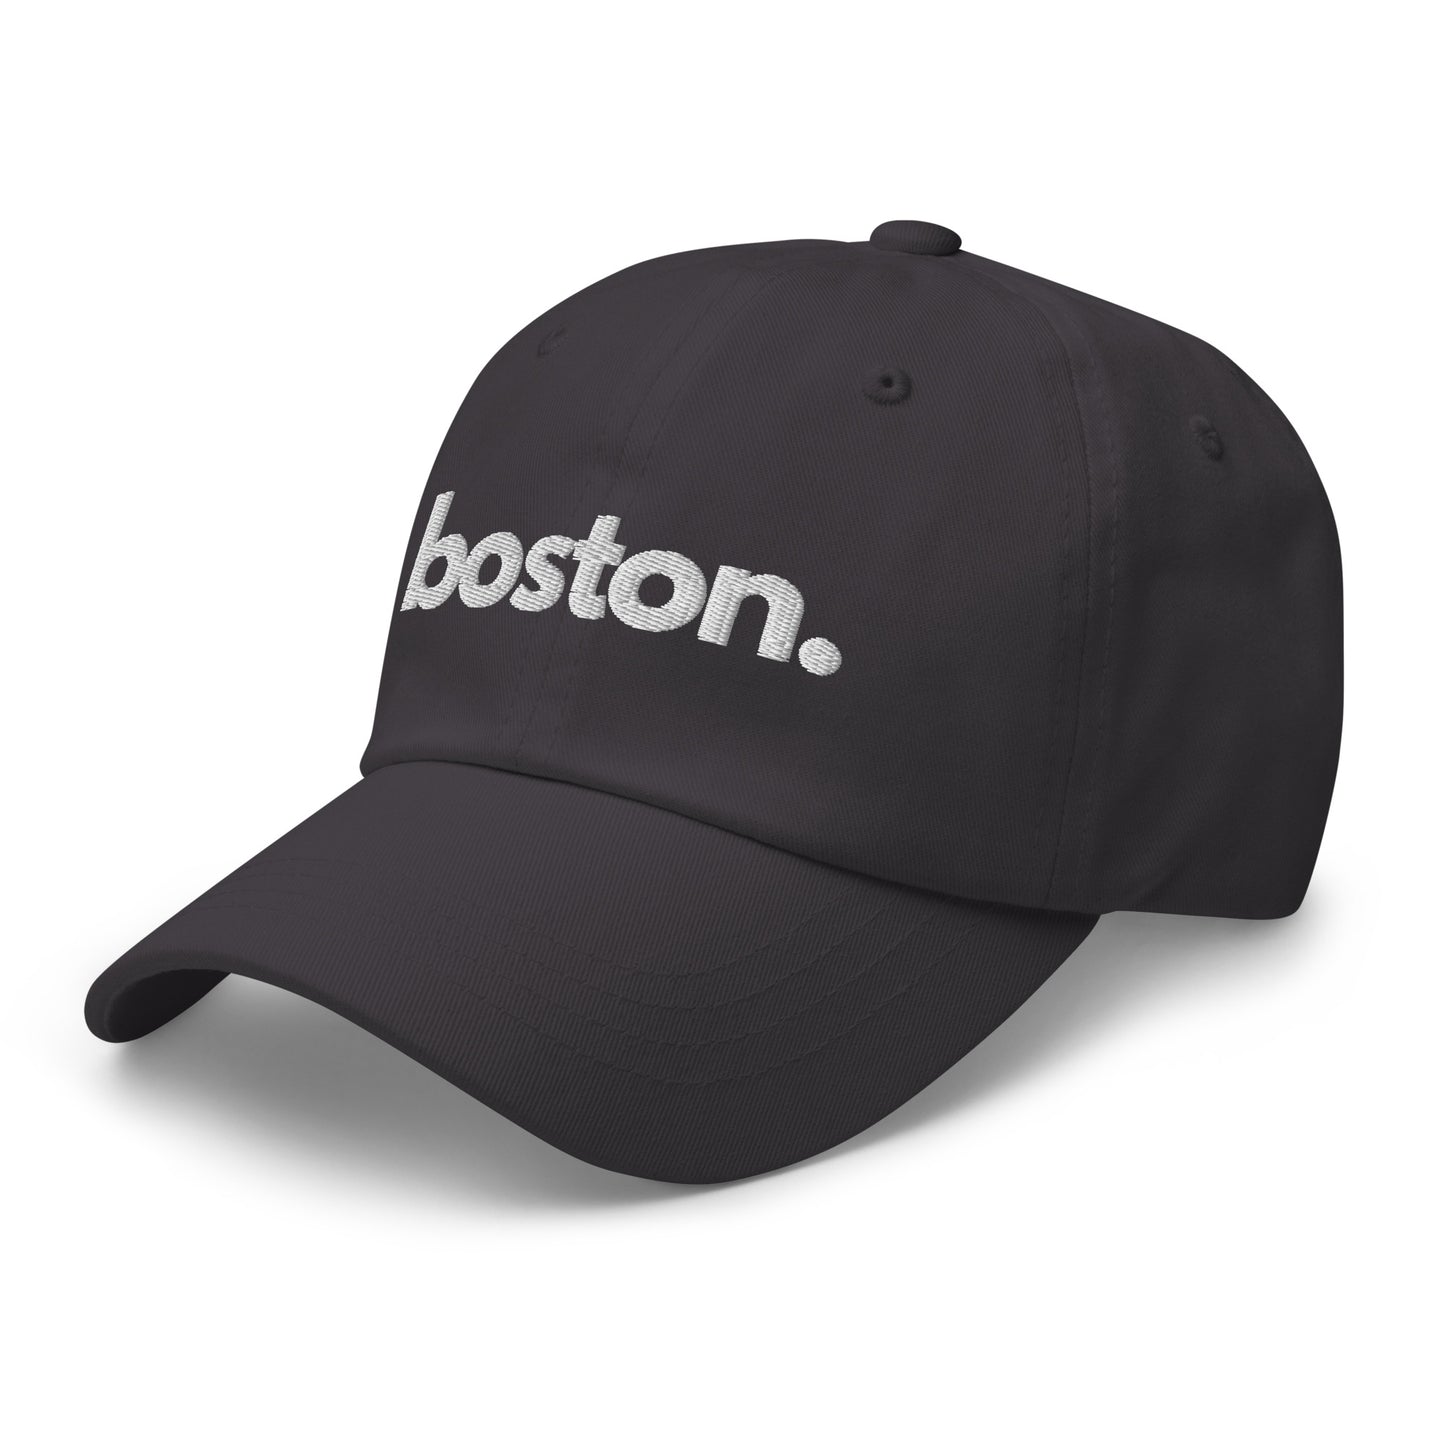 boston. hat